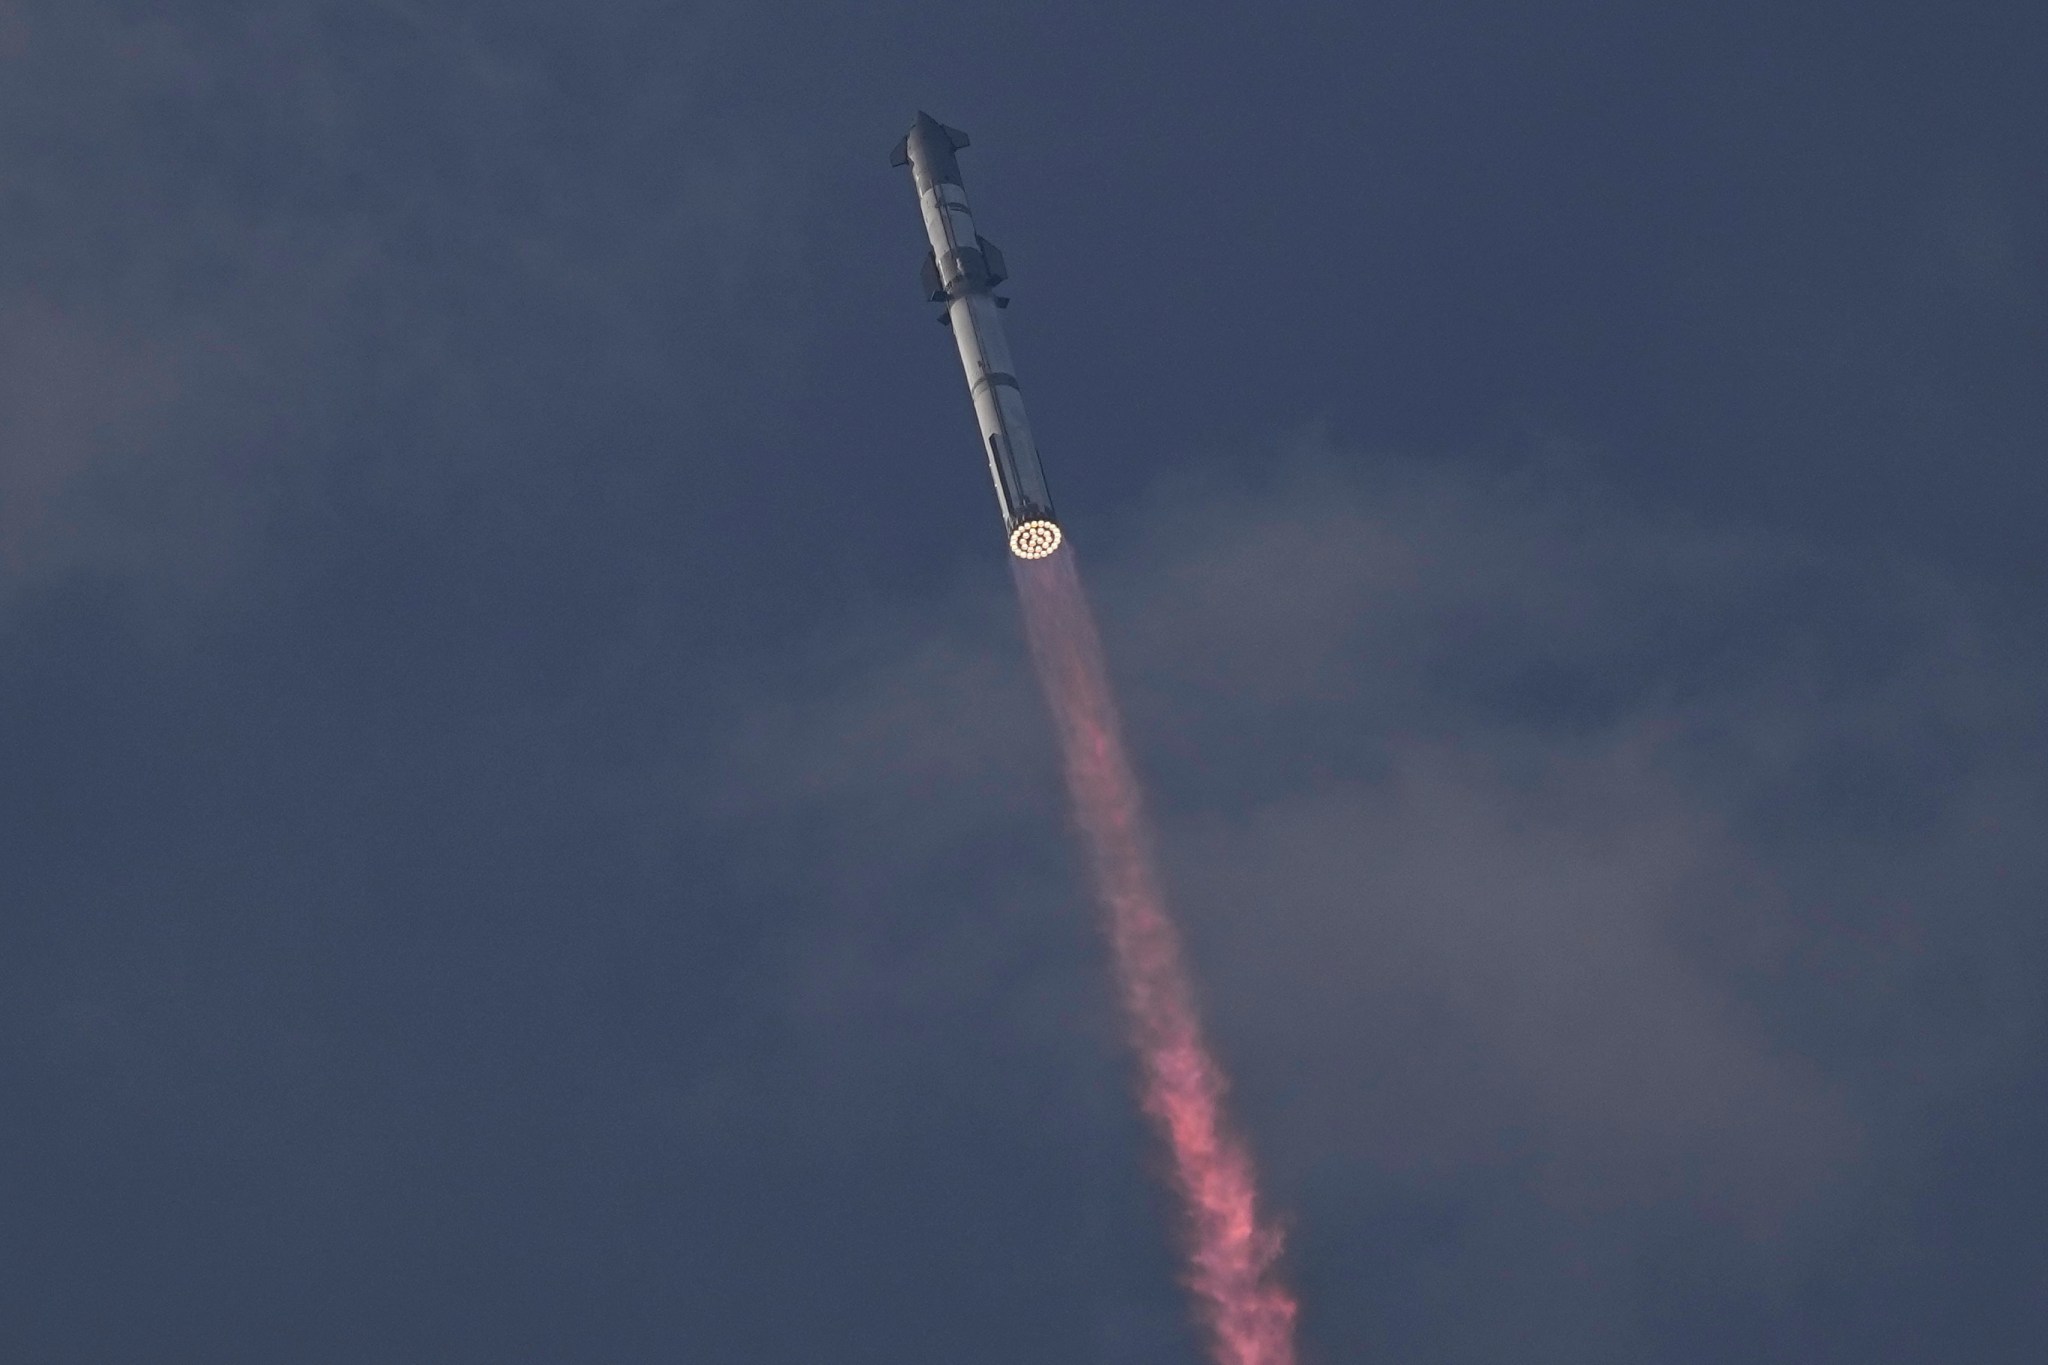 Elon Musk loses a SpaceX mega rocket descending to Earth after hourlong test flight